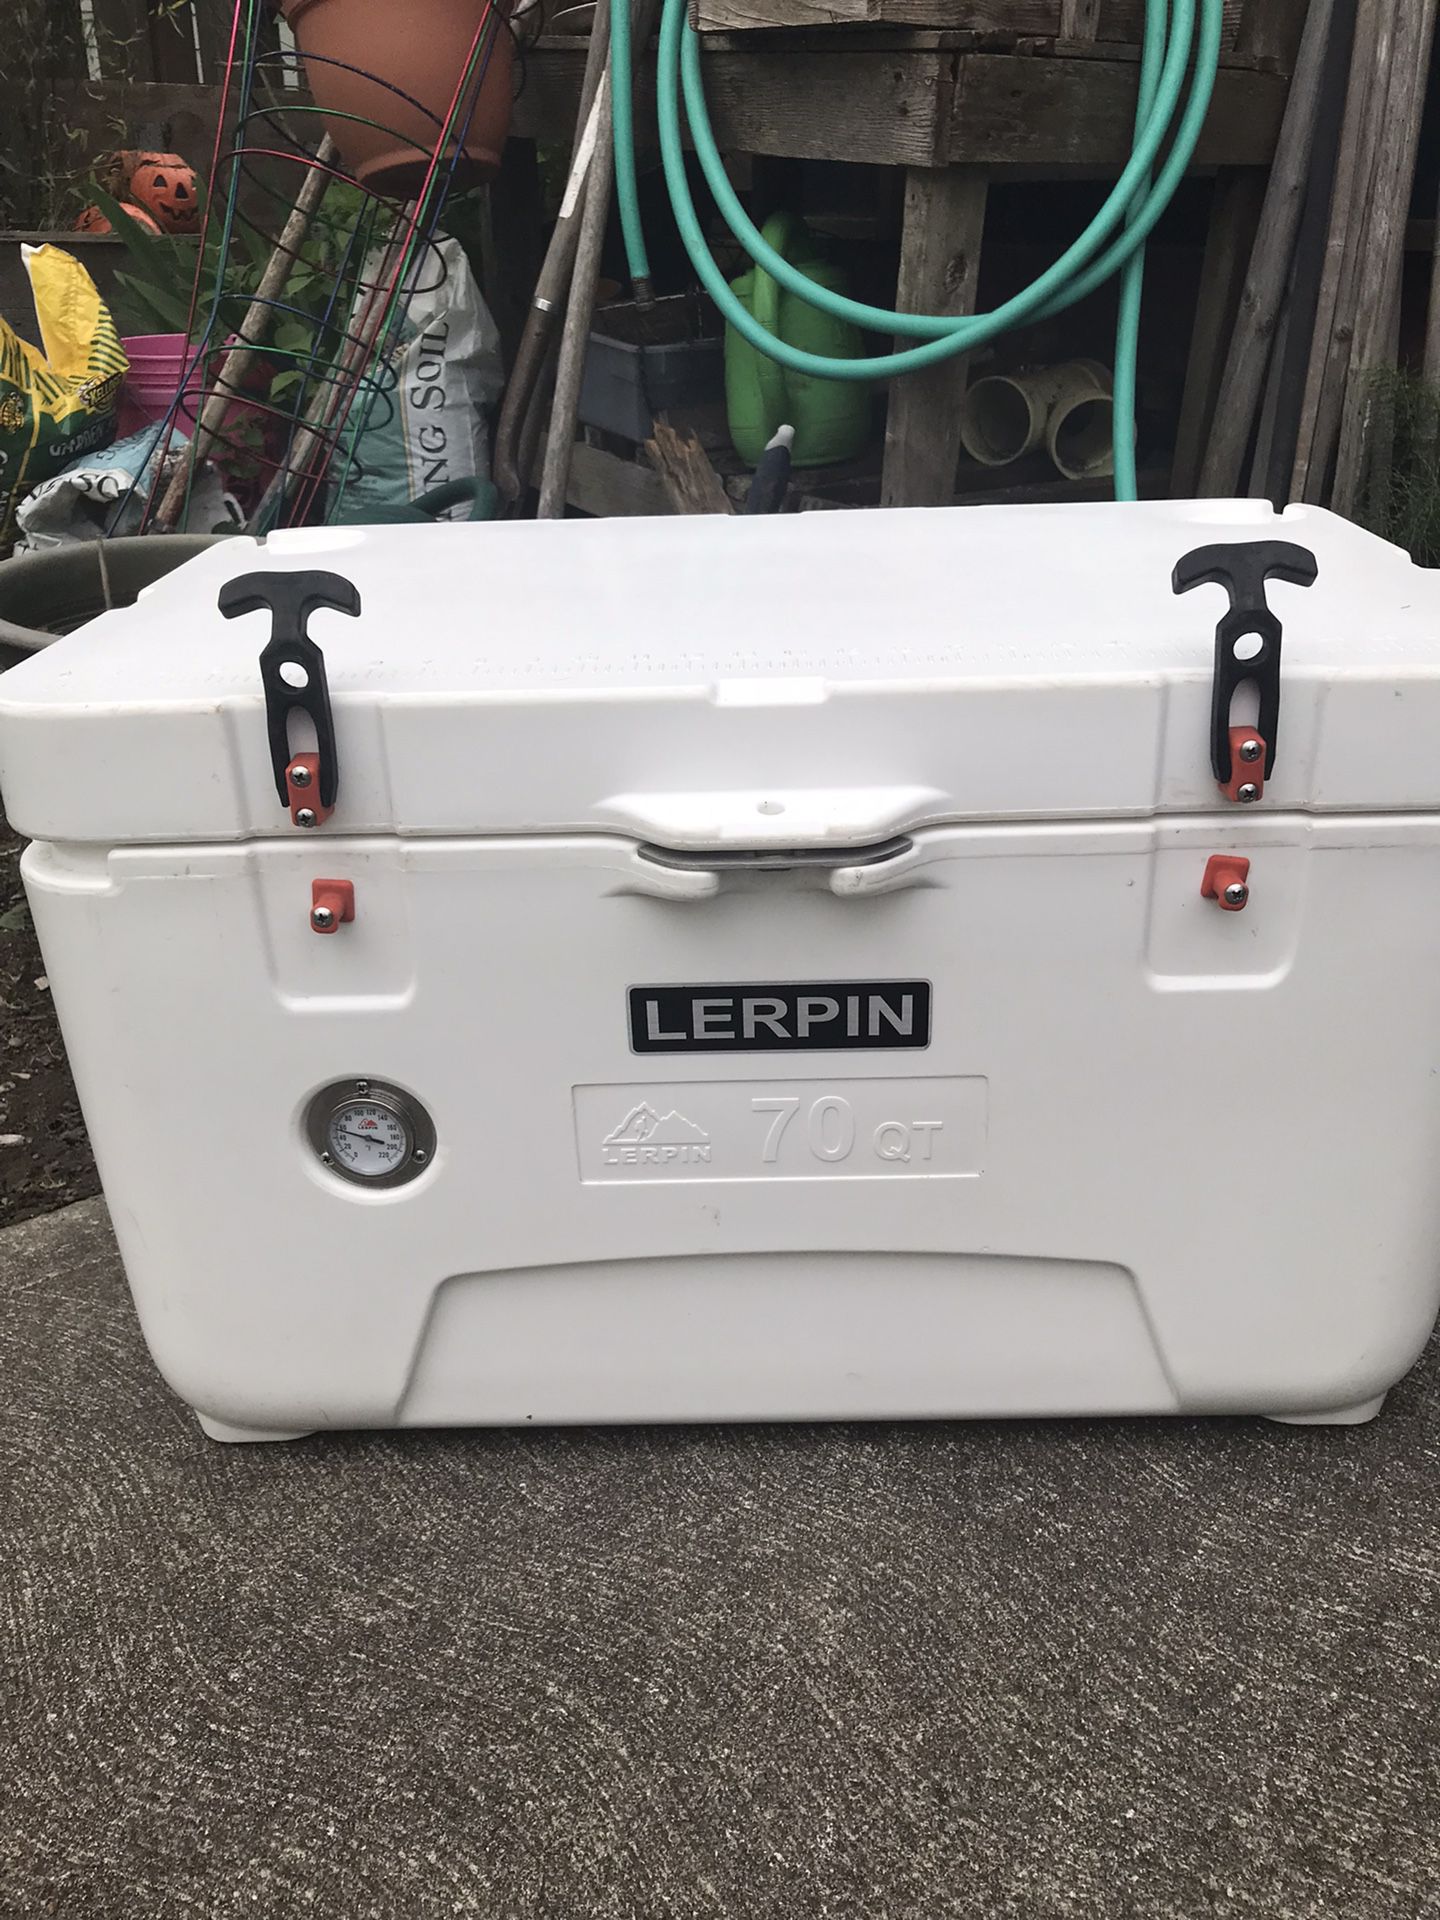 Lerpin 17ct Cooler